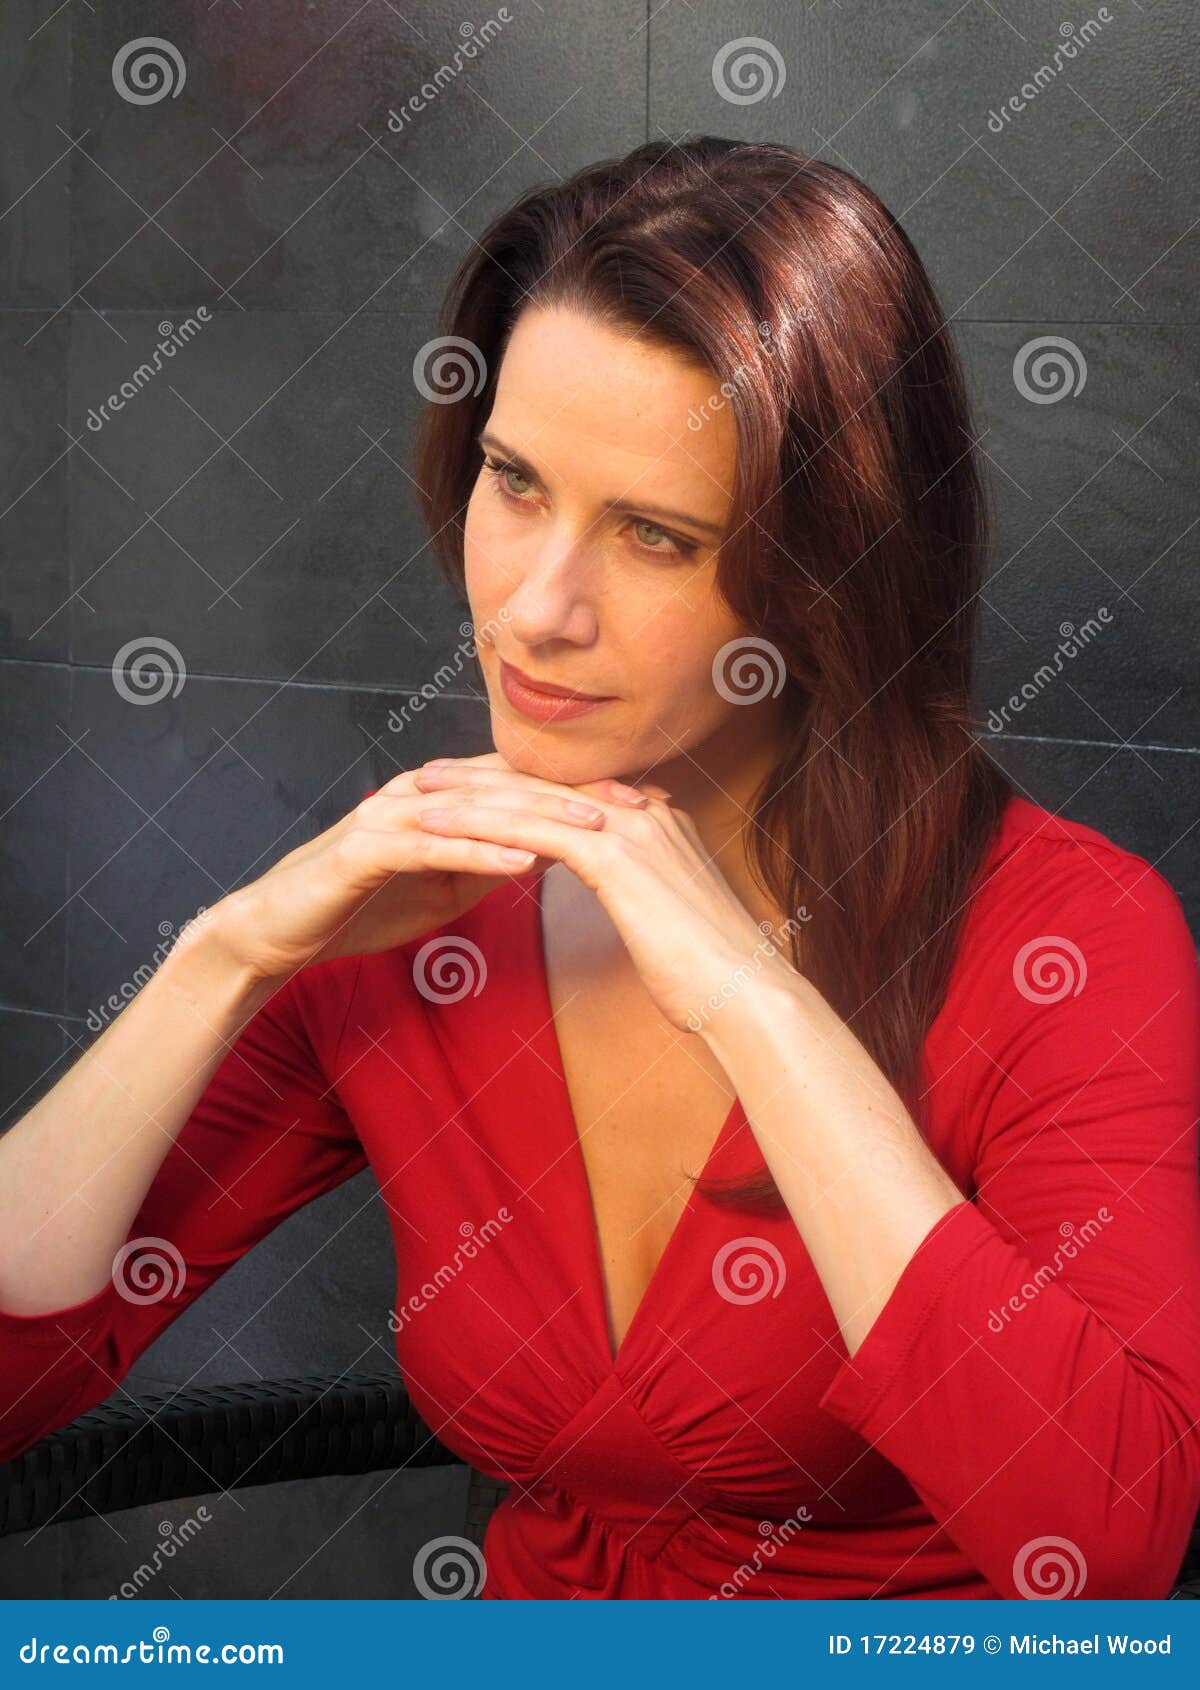 woman intently listening